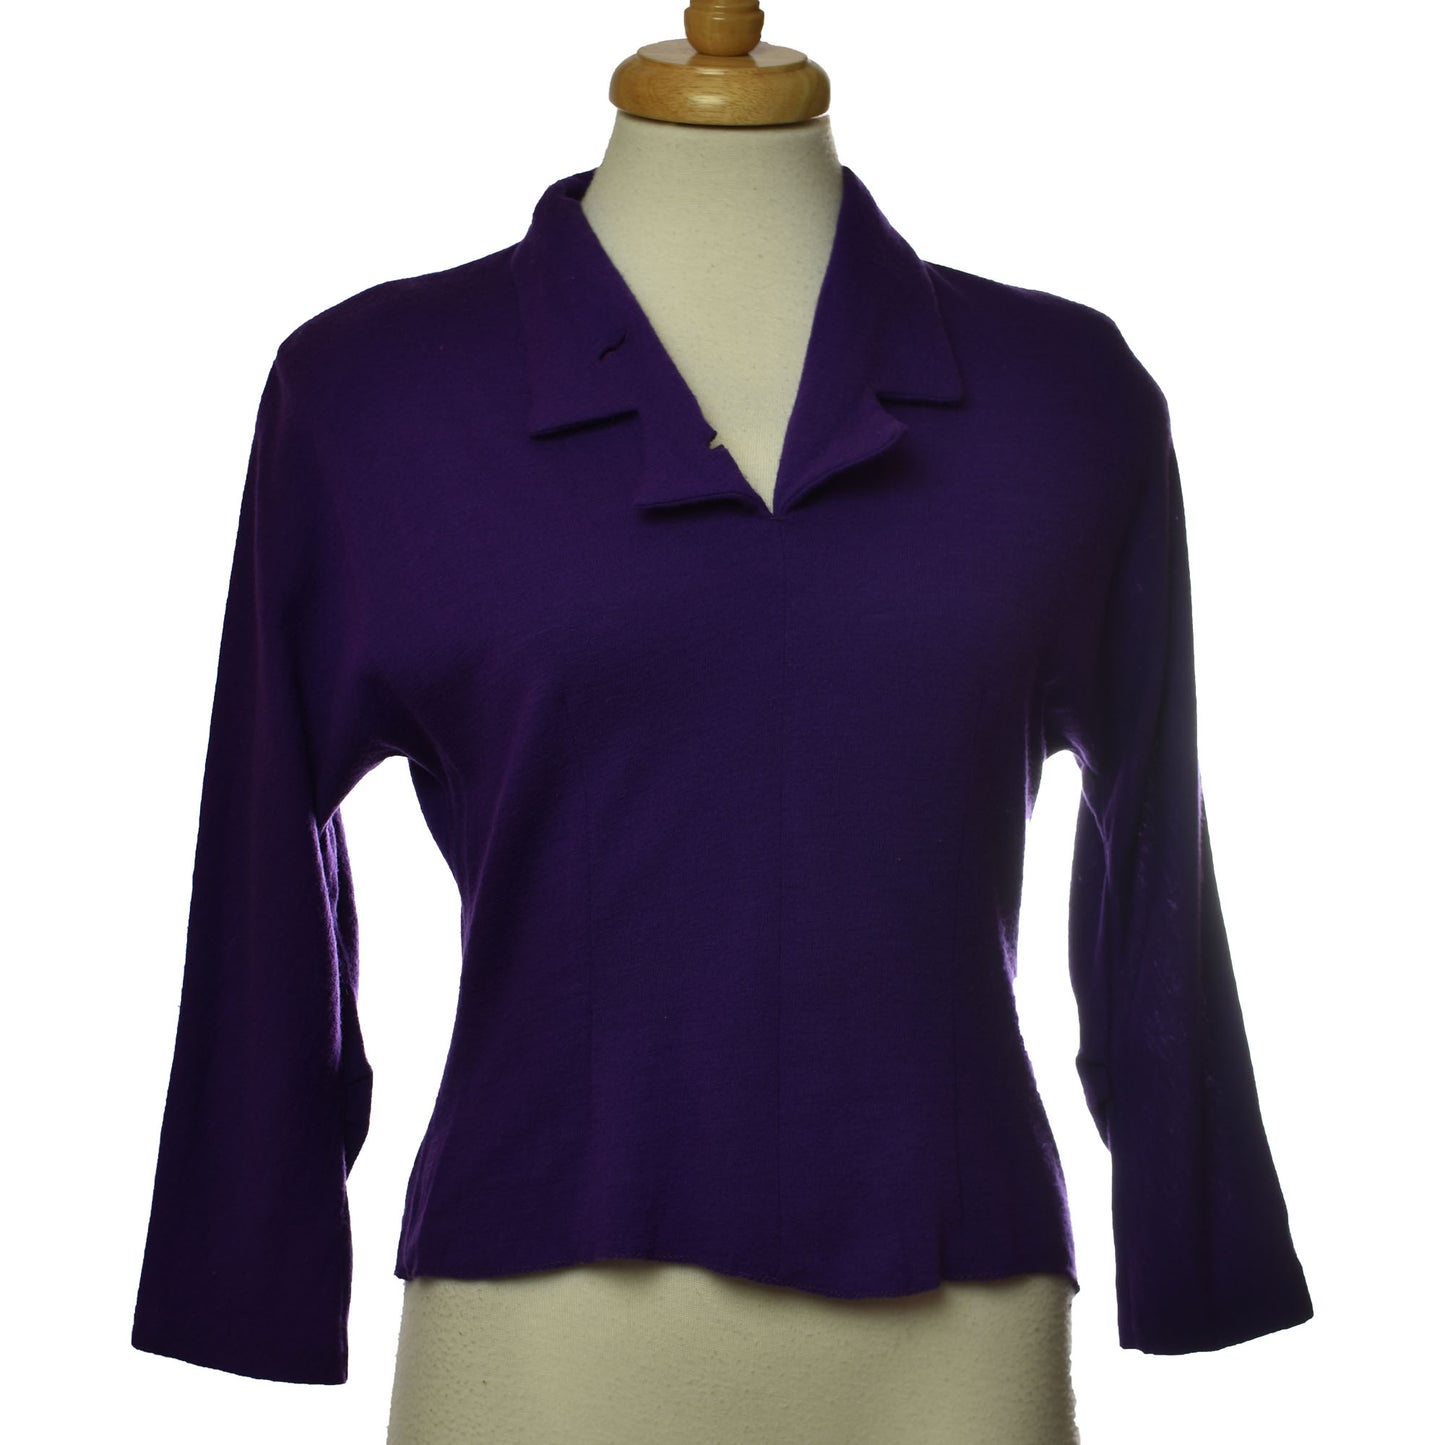 Vintage 50s Pin Up Jerry Gilden Spectator Purple Sweater